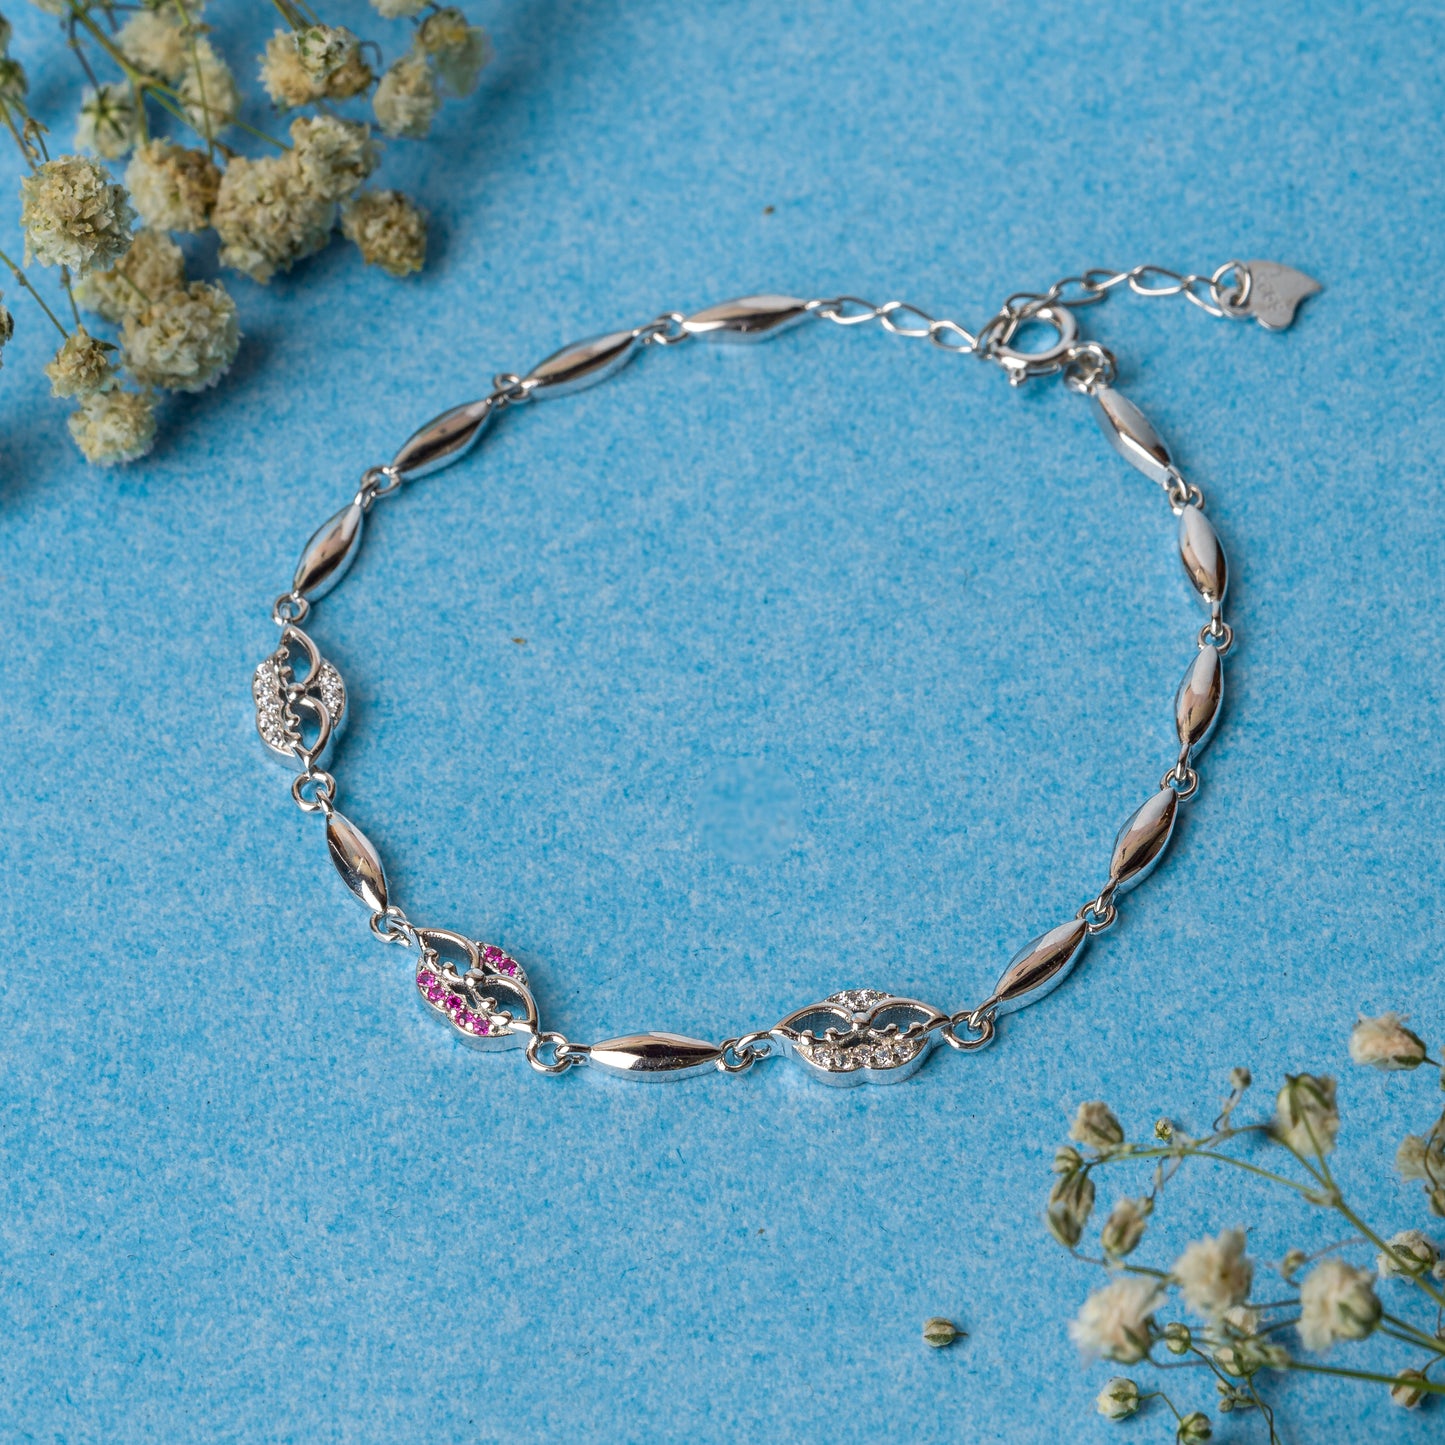 Silver with Subtle Pink Stones Bracelet.